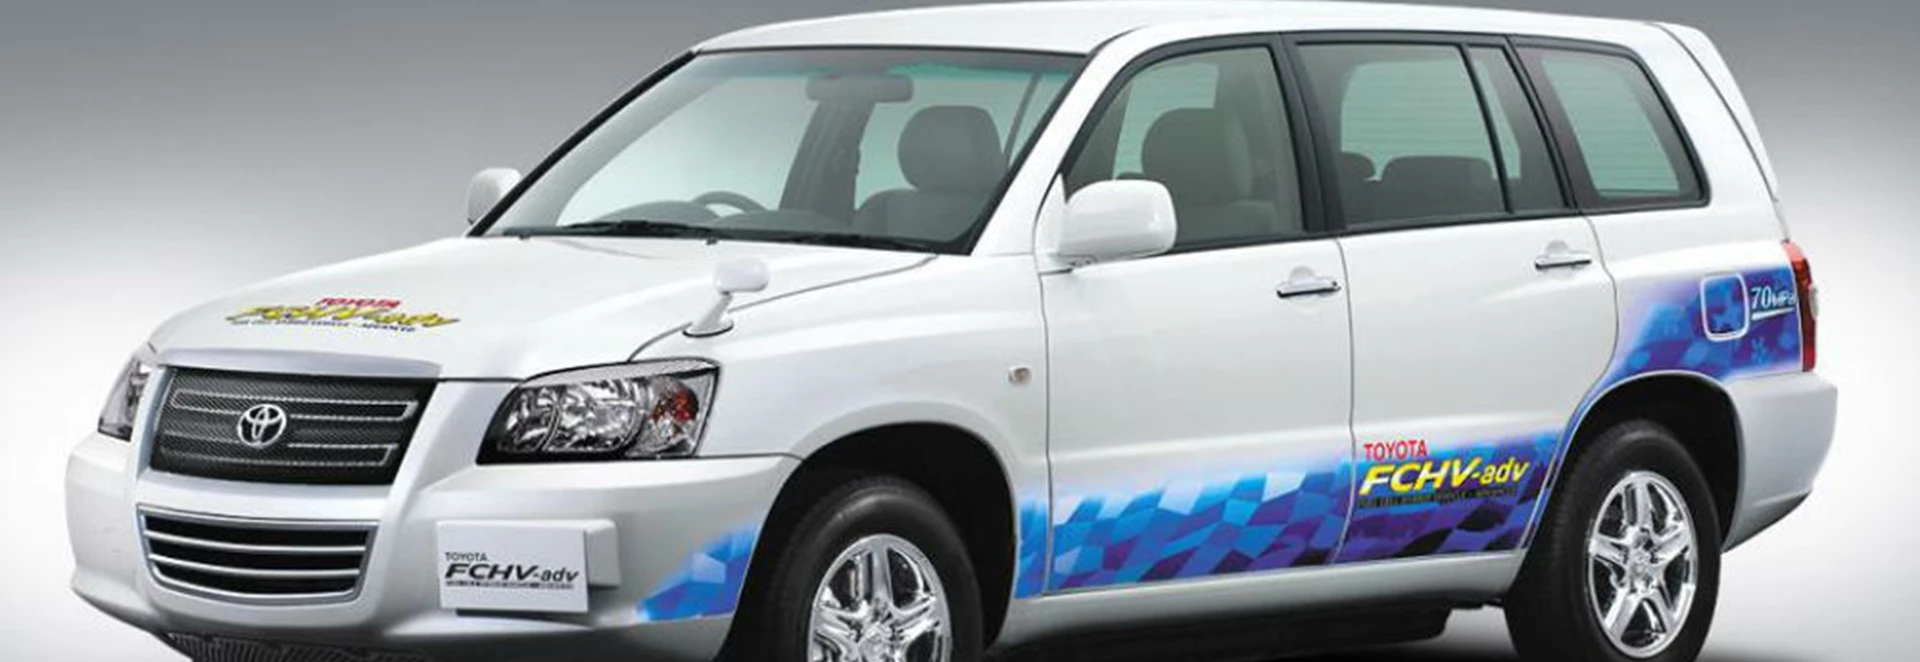 Toyota FCHV-adv hydrogen car first drive 